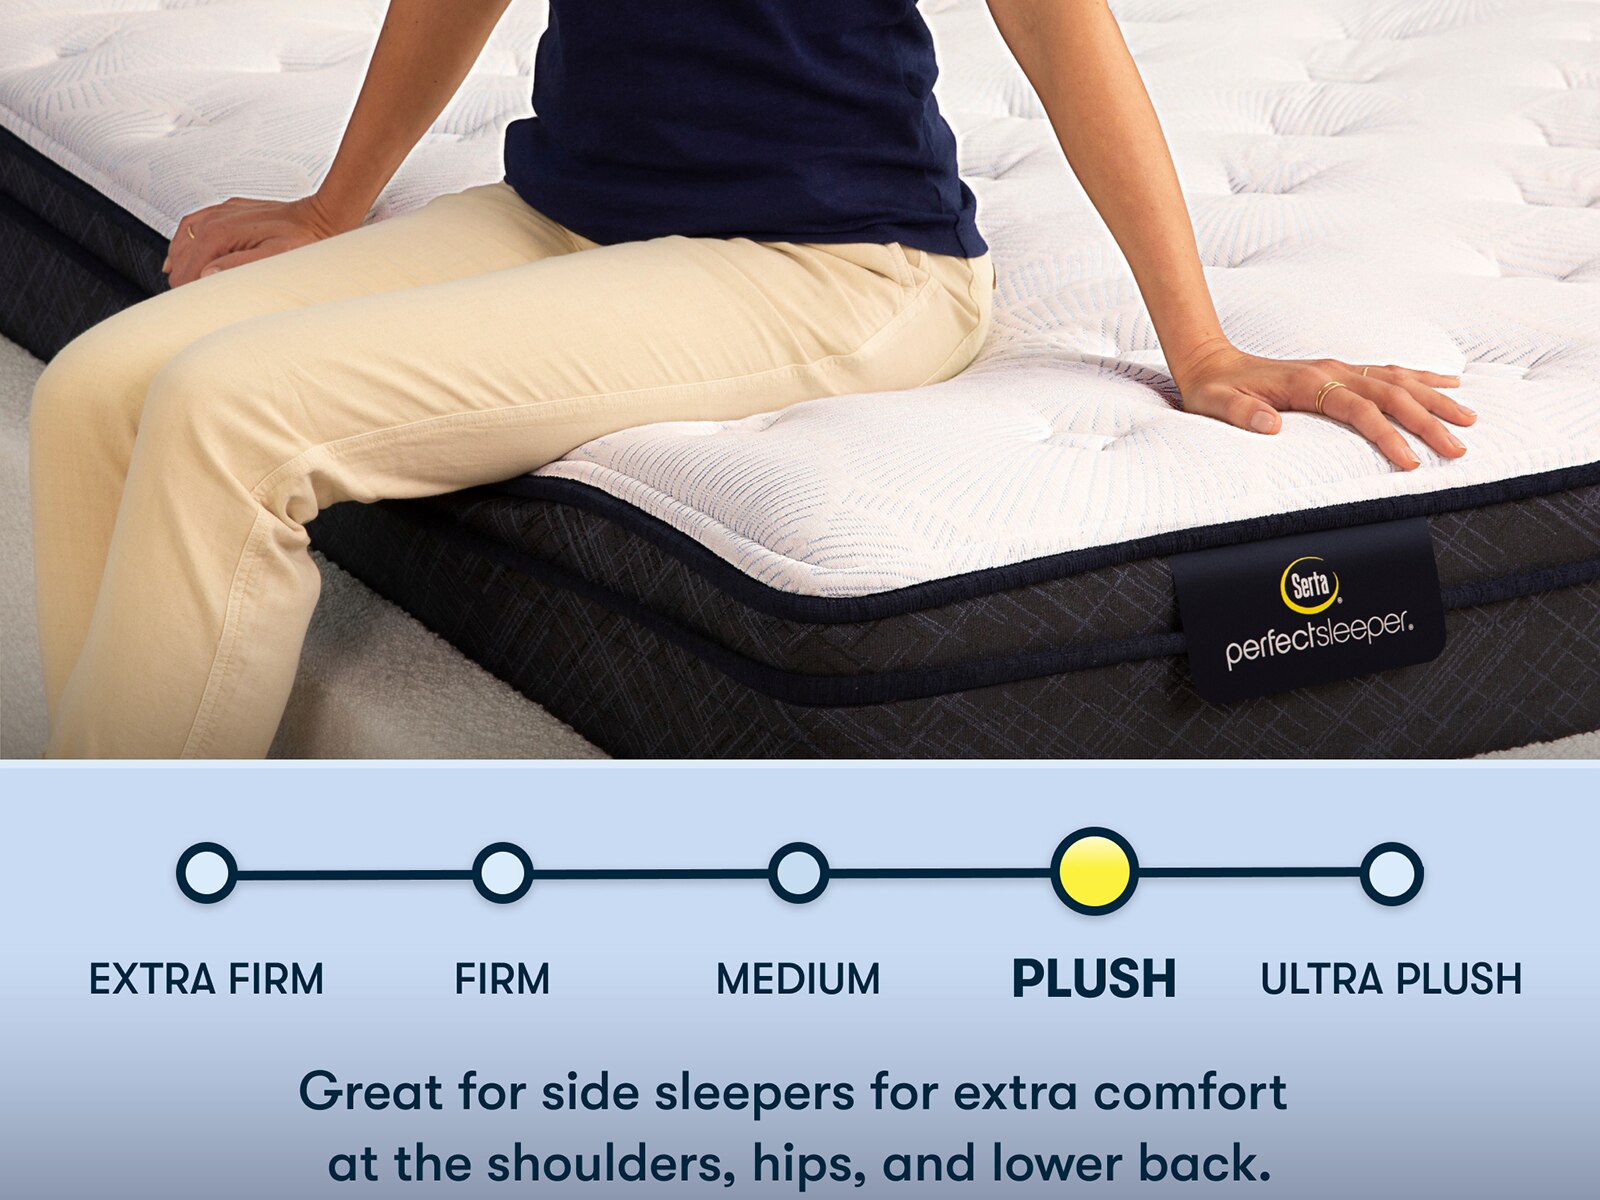 serta perfect sleeper harlington plush eurotop mattress reviews